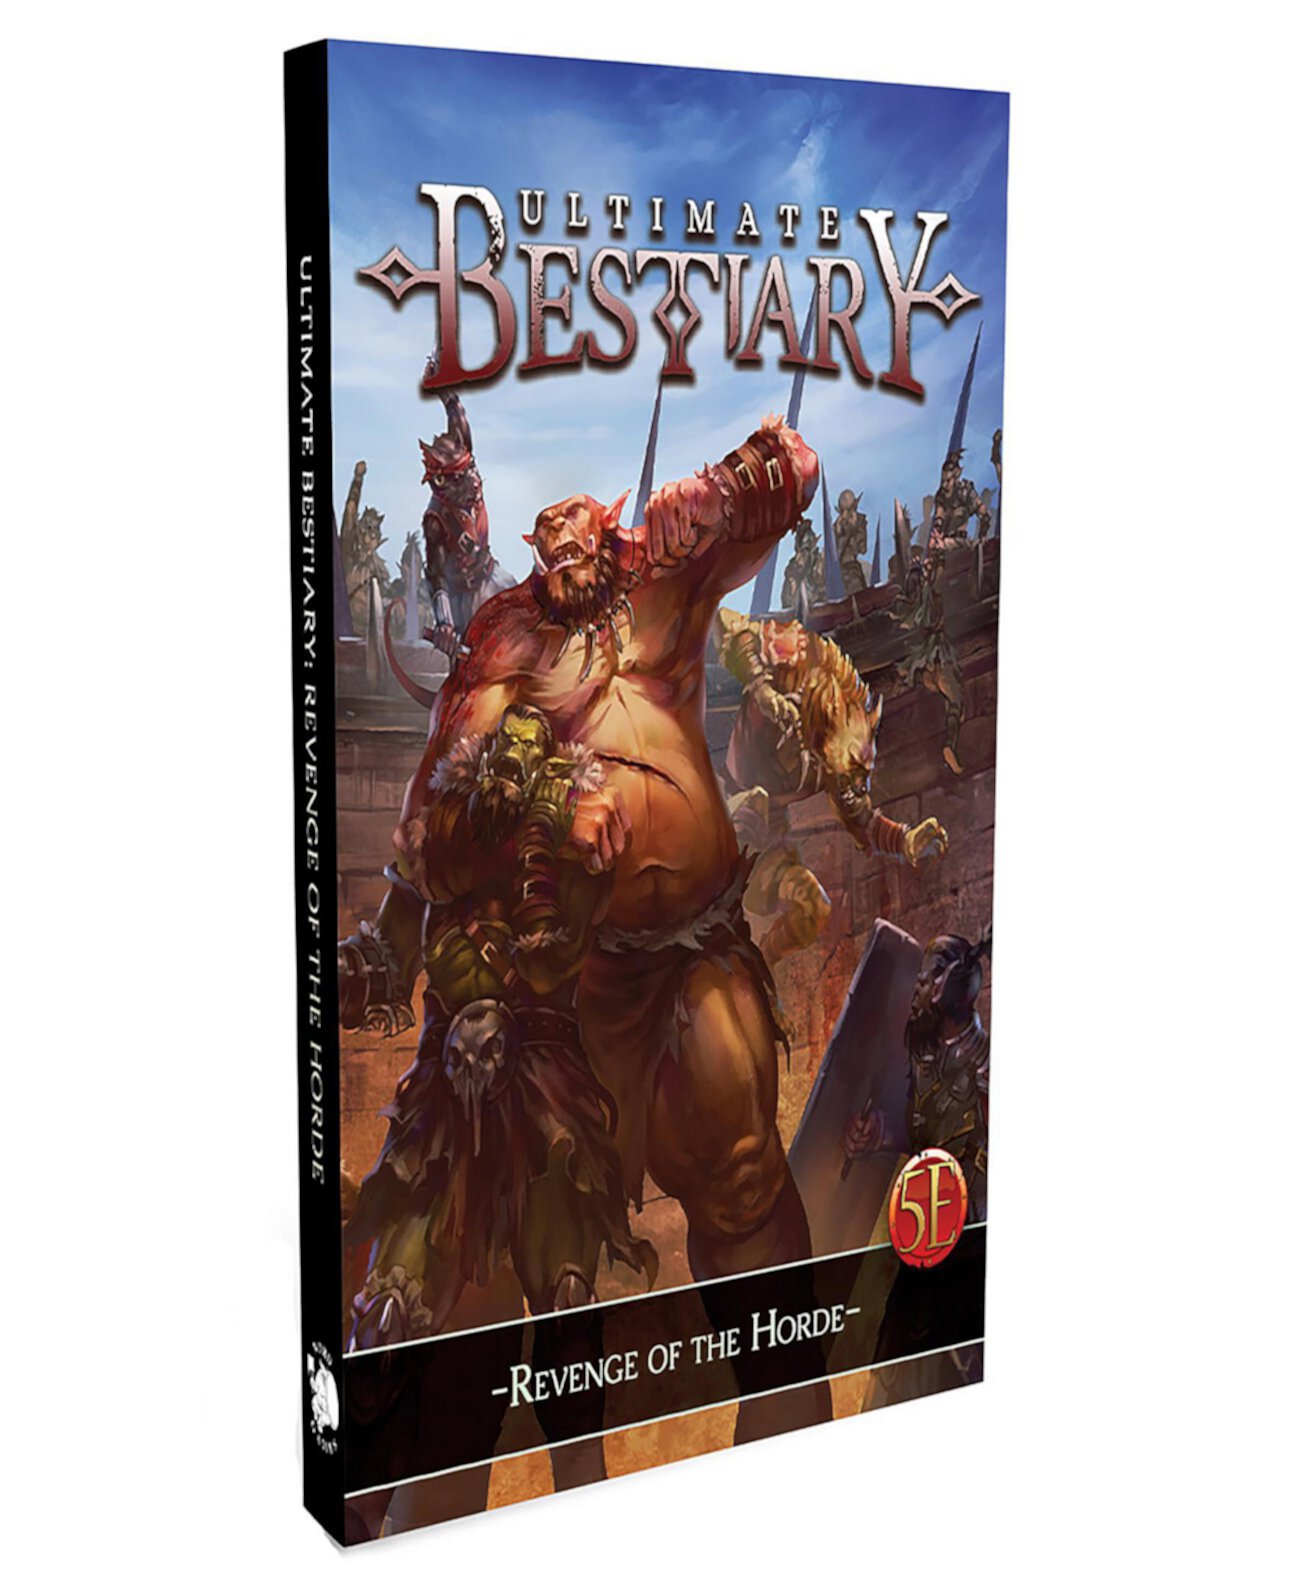 Ultimate Bestiary Revenge of the Horde RPG Supplement Book Nord Games